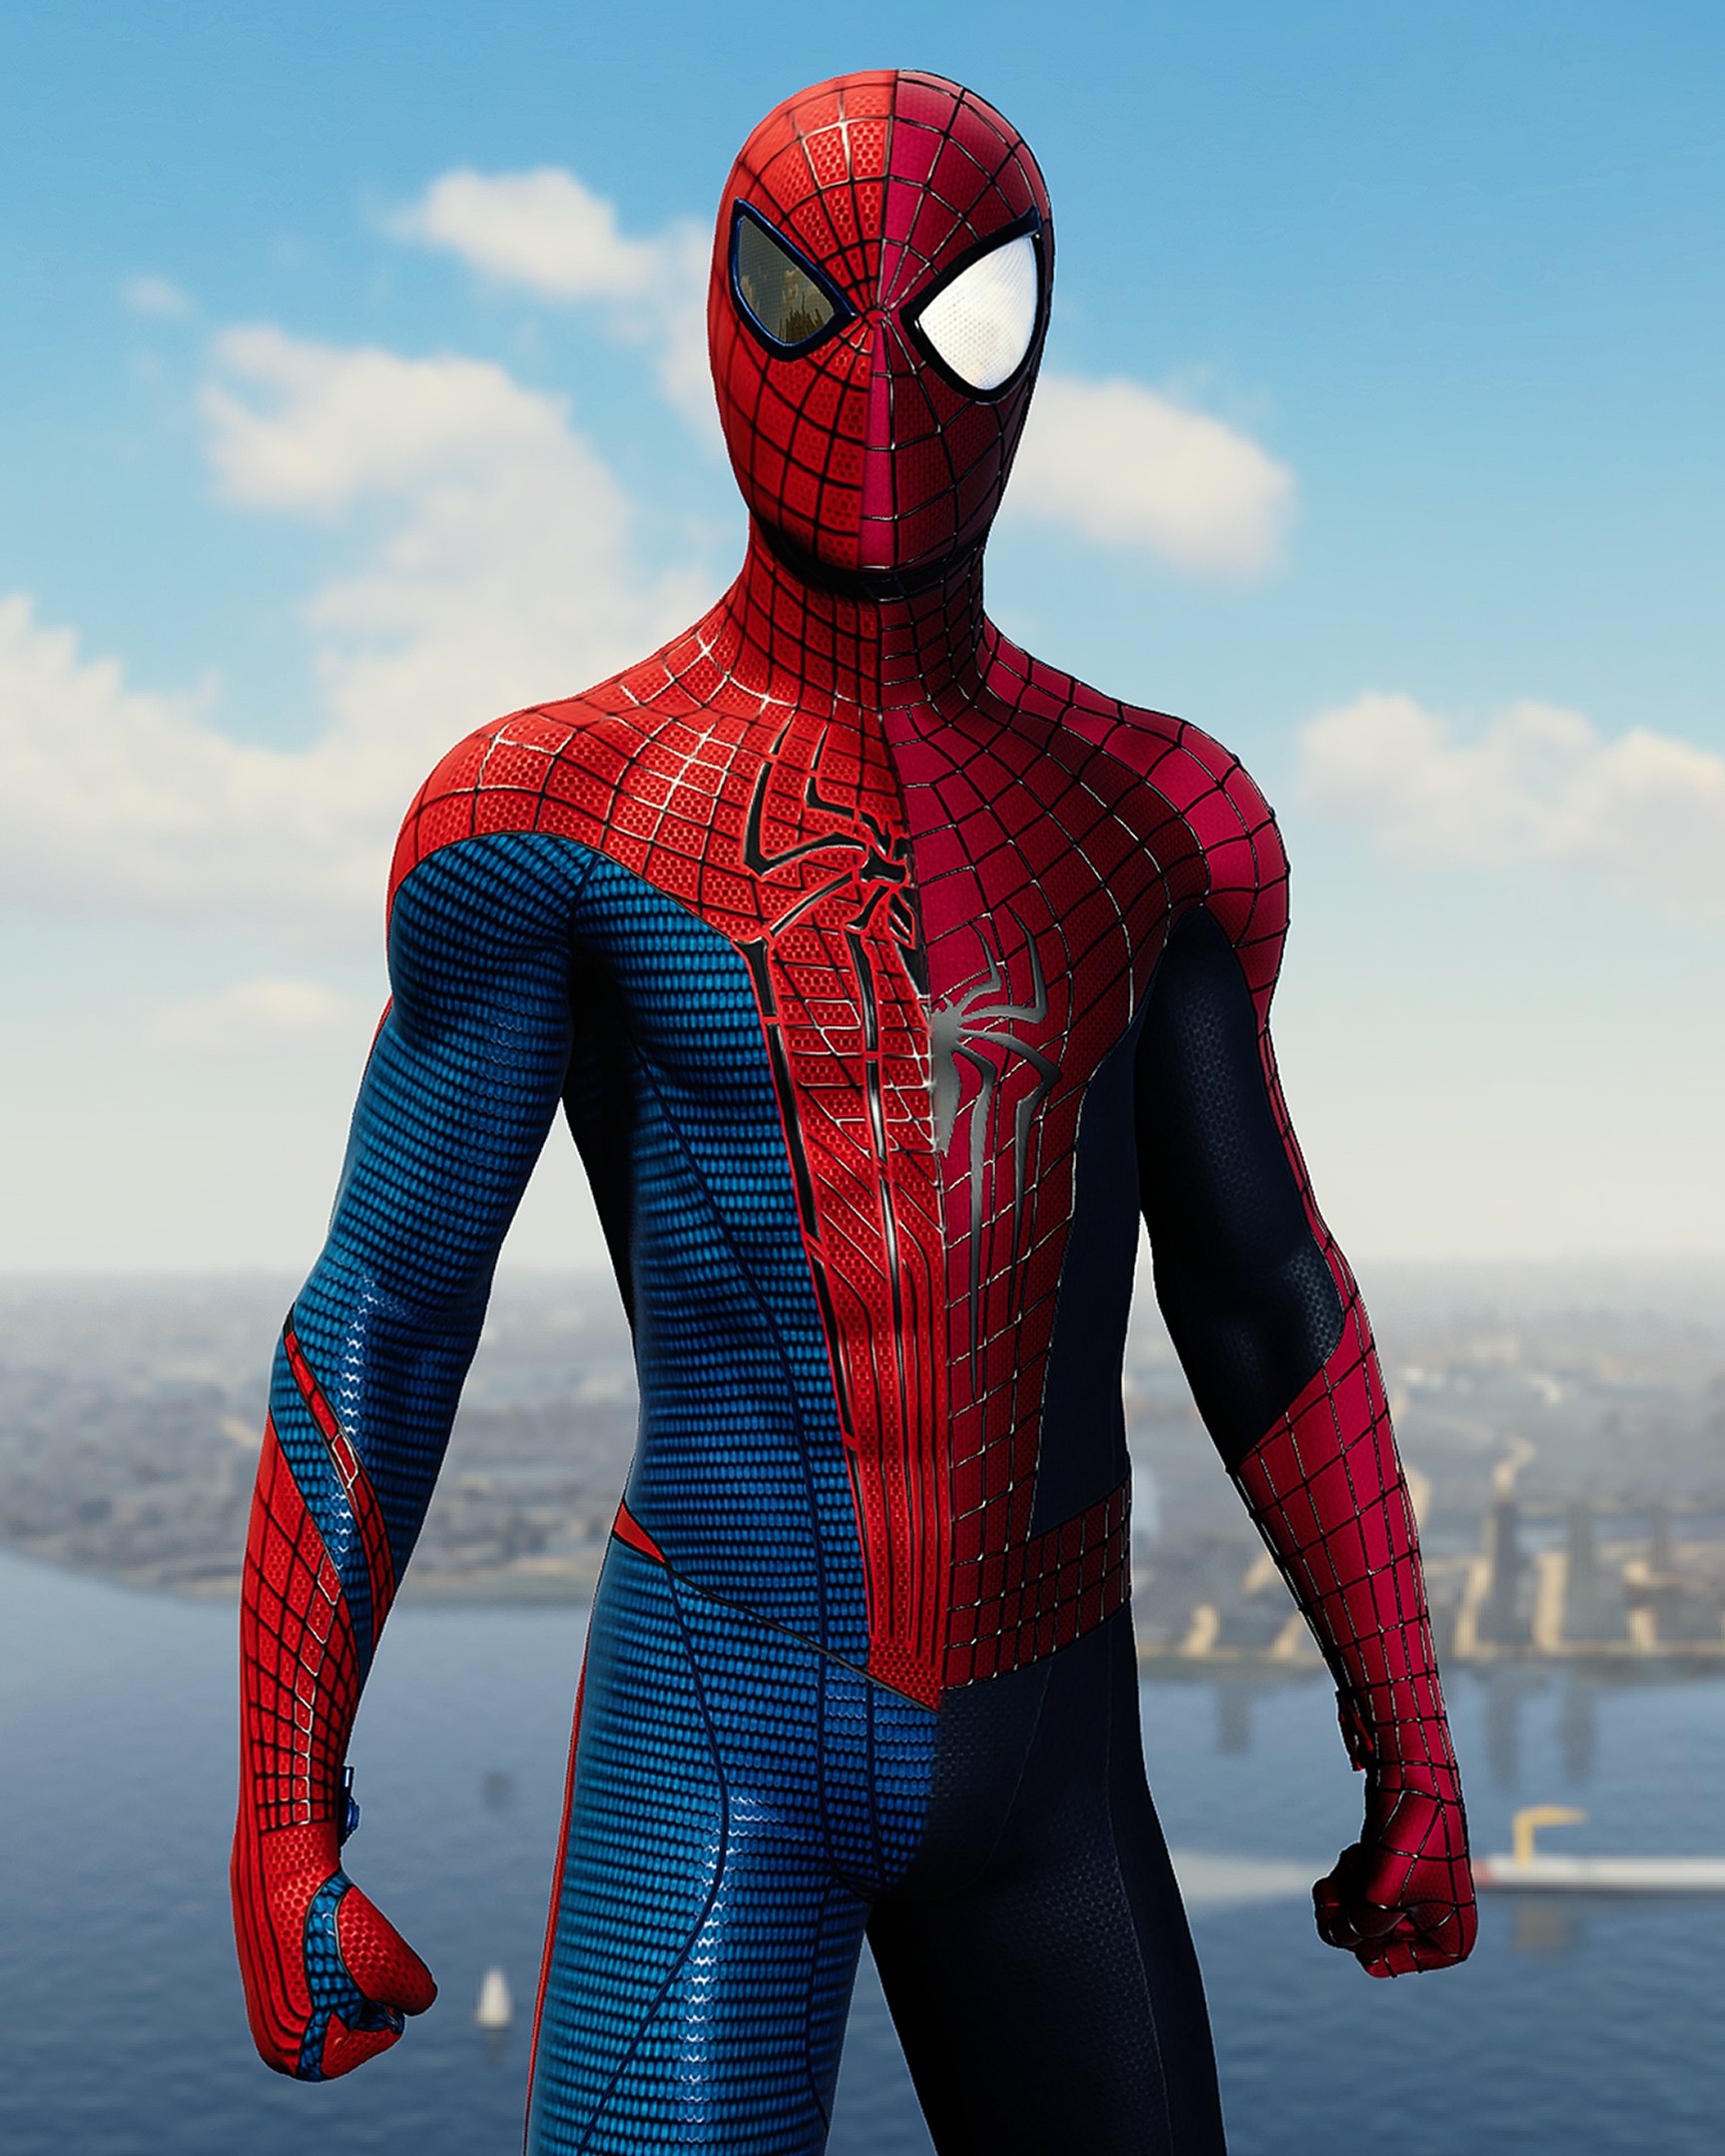 Spider-man(Web of shadows) Vs Spider-man ps4(Insomniac) #spiderman